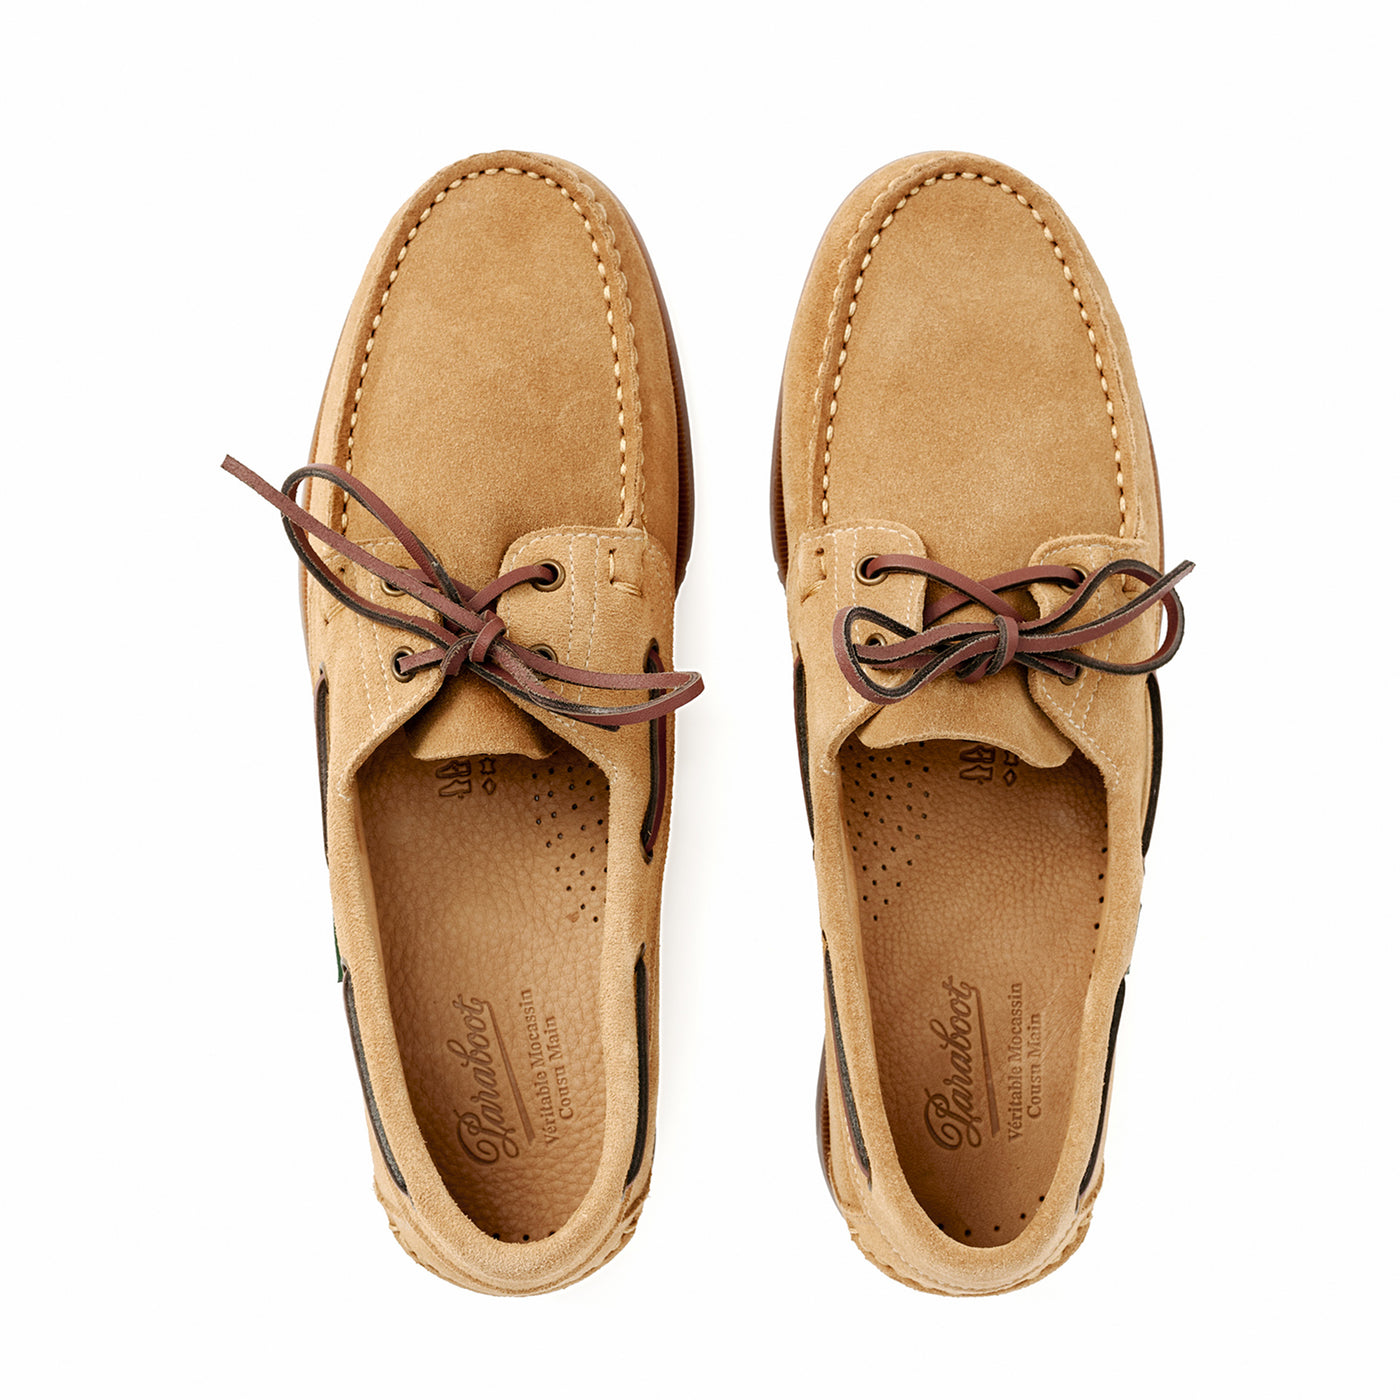  Barth / marine shoes